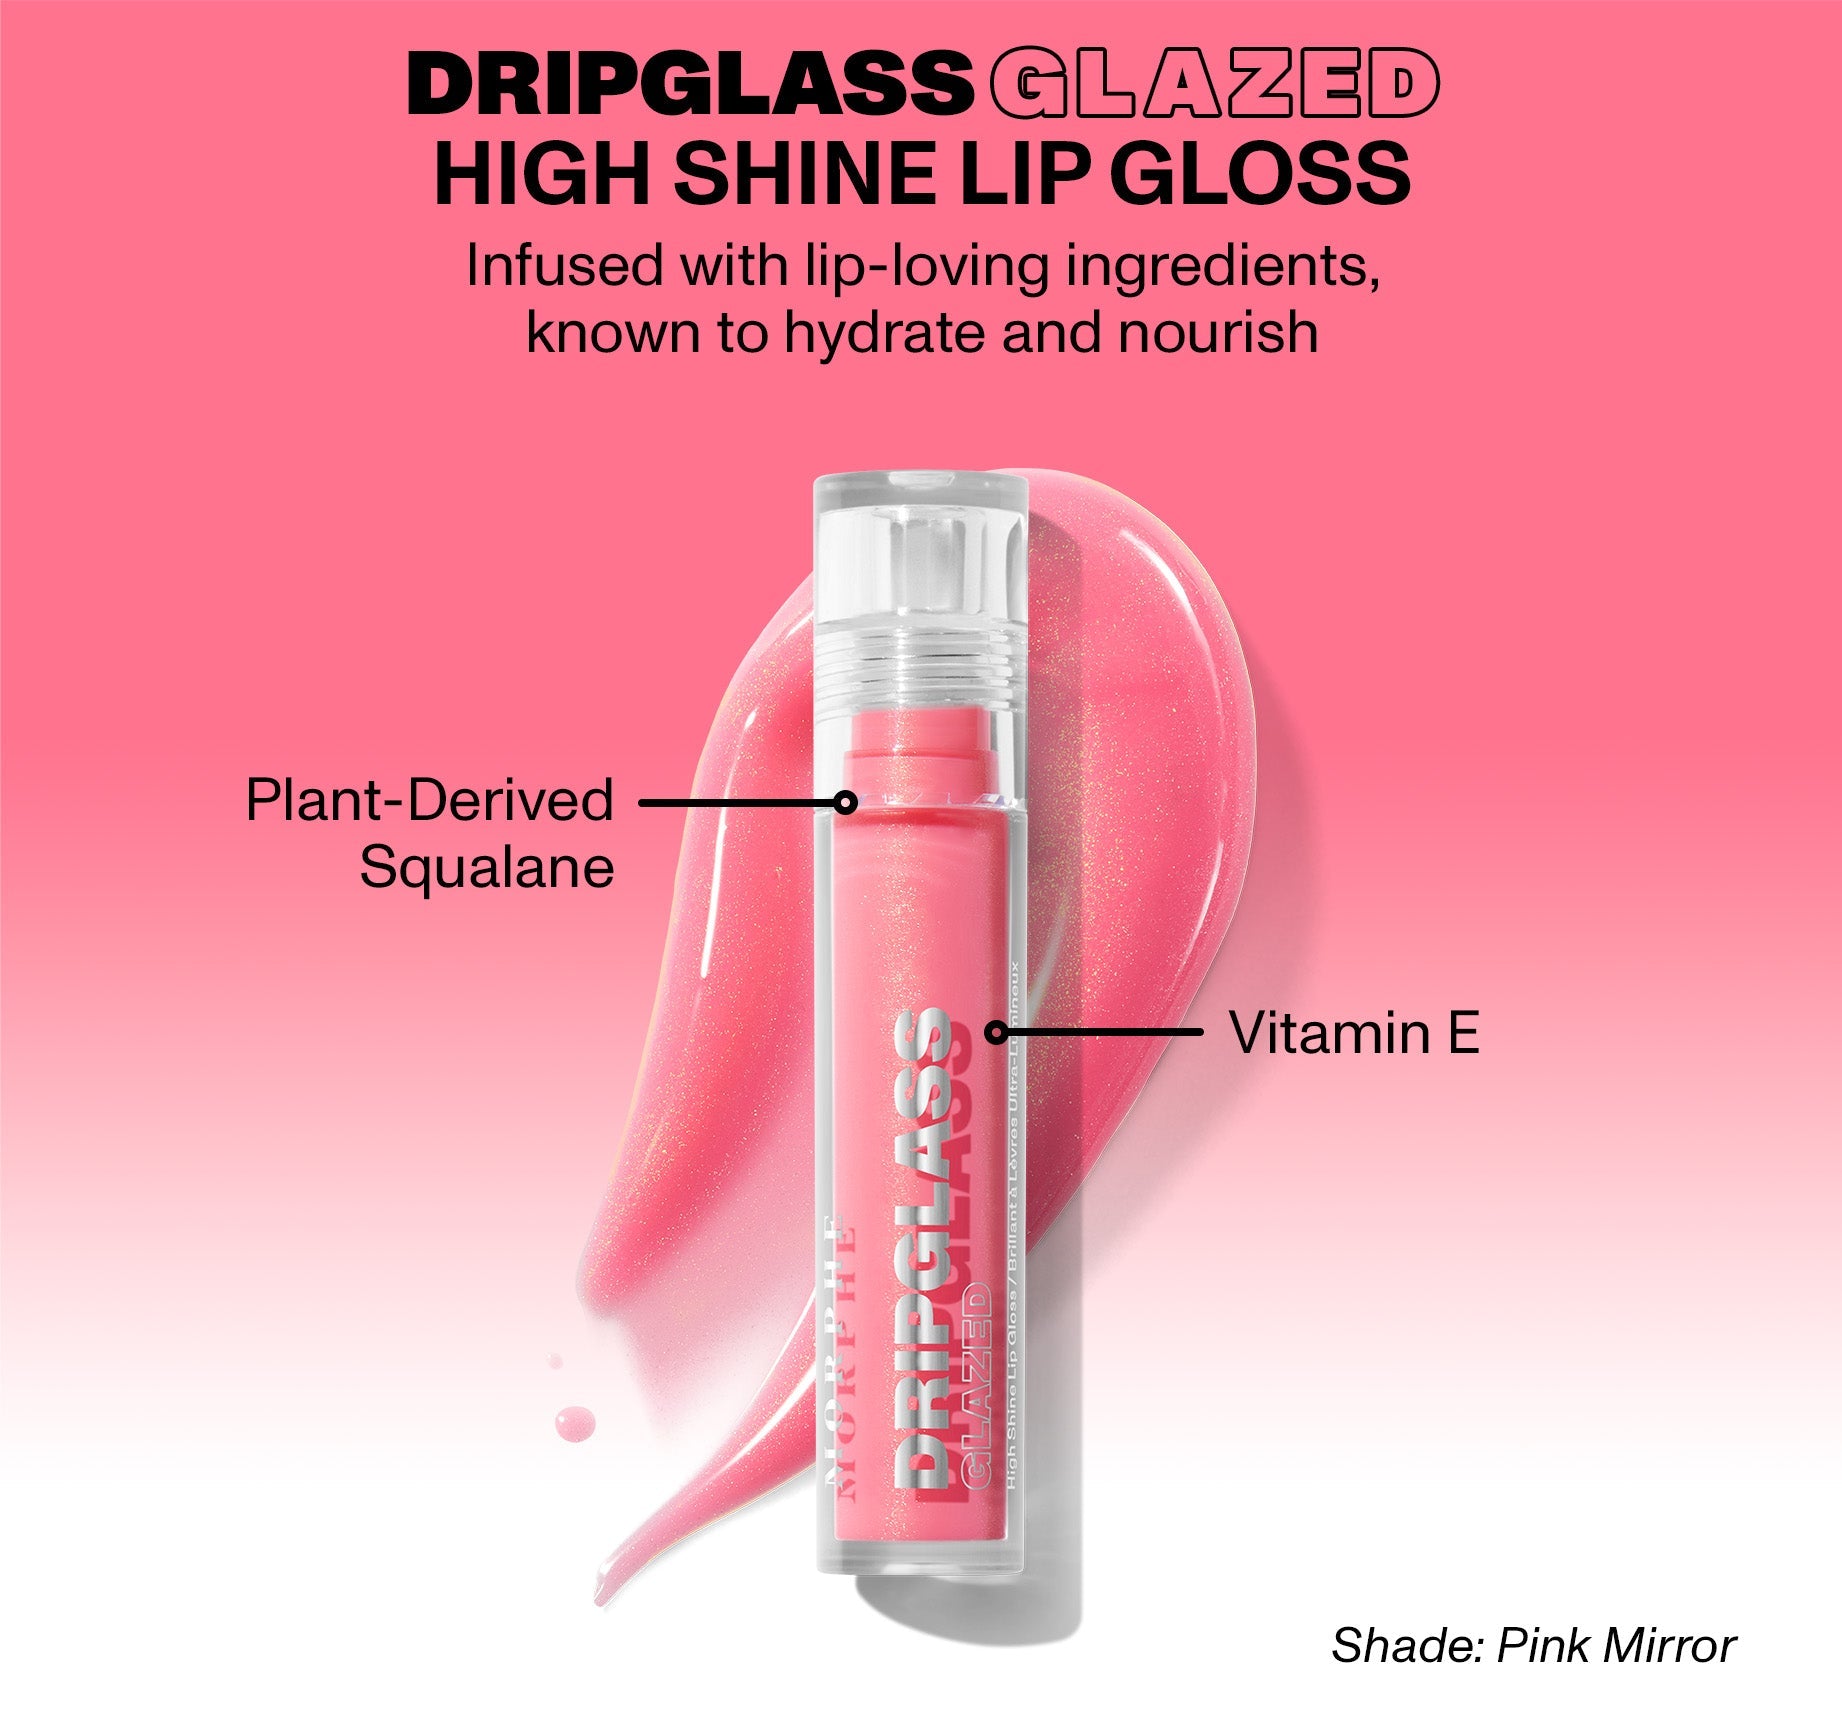 Dripglass Glazed High Shine Lip Gloss - Pink Mirror - Image 8